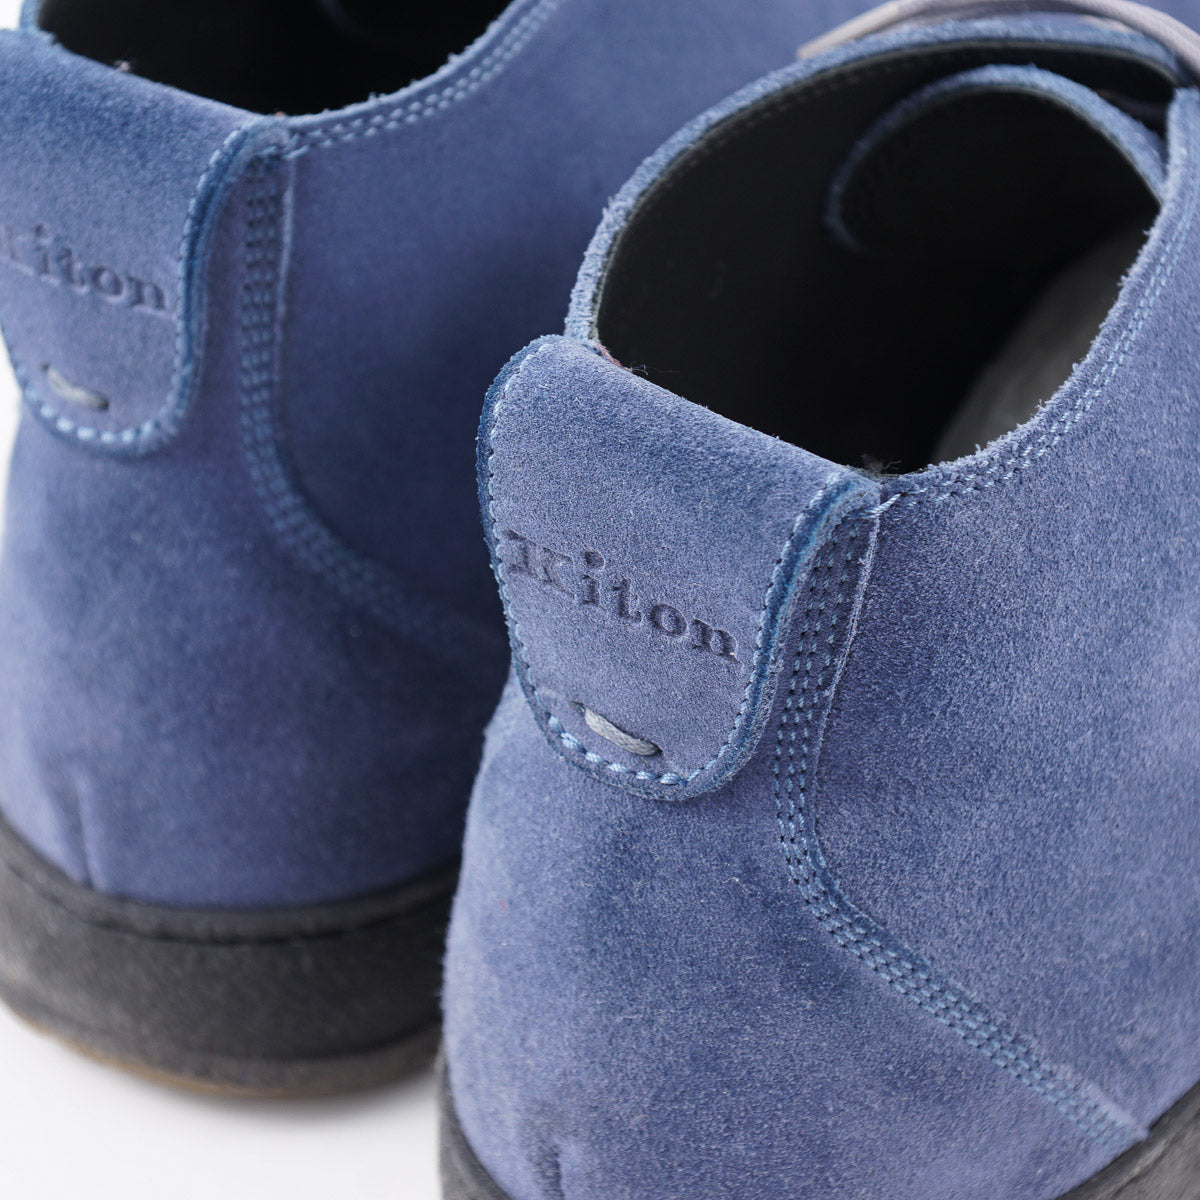 Kiton Suede Chukka Sneaker in Slate Blue - Top Shelf Apparel